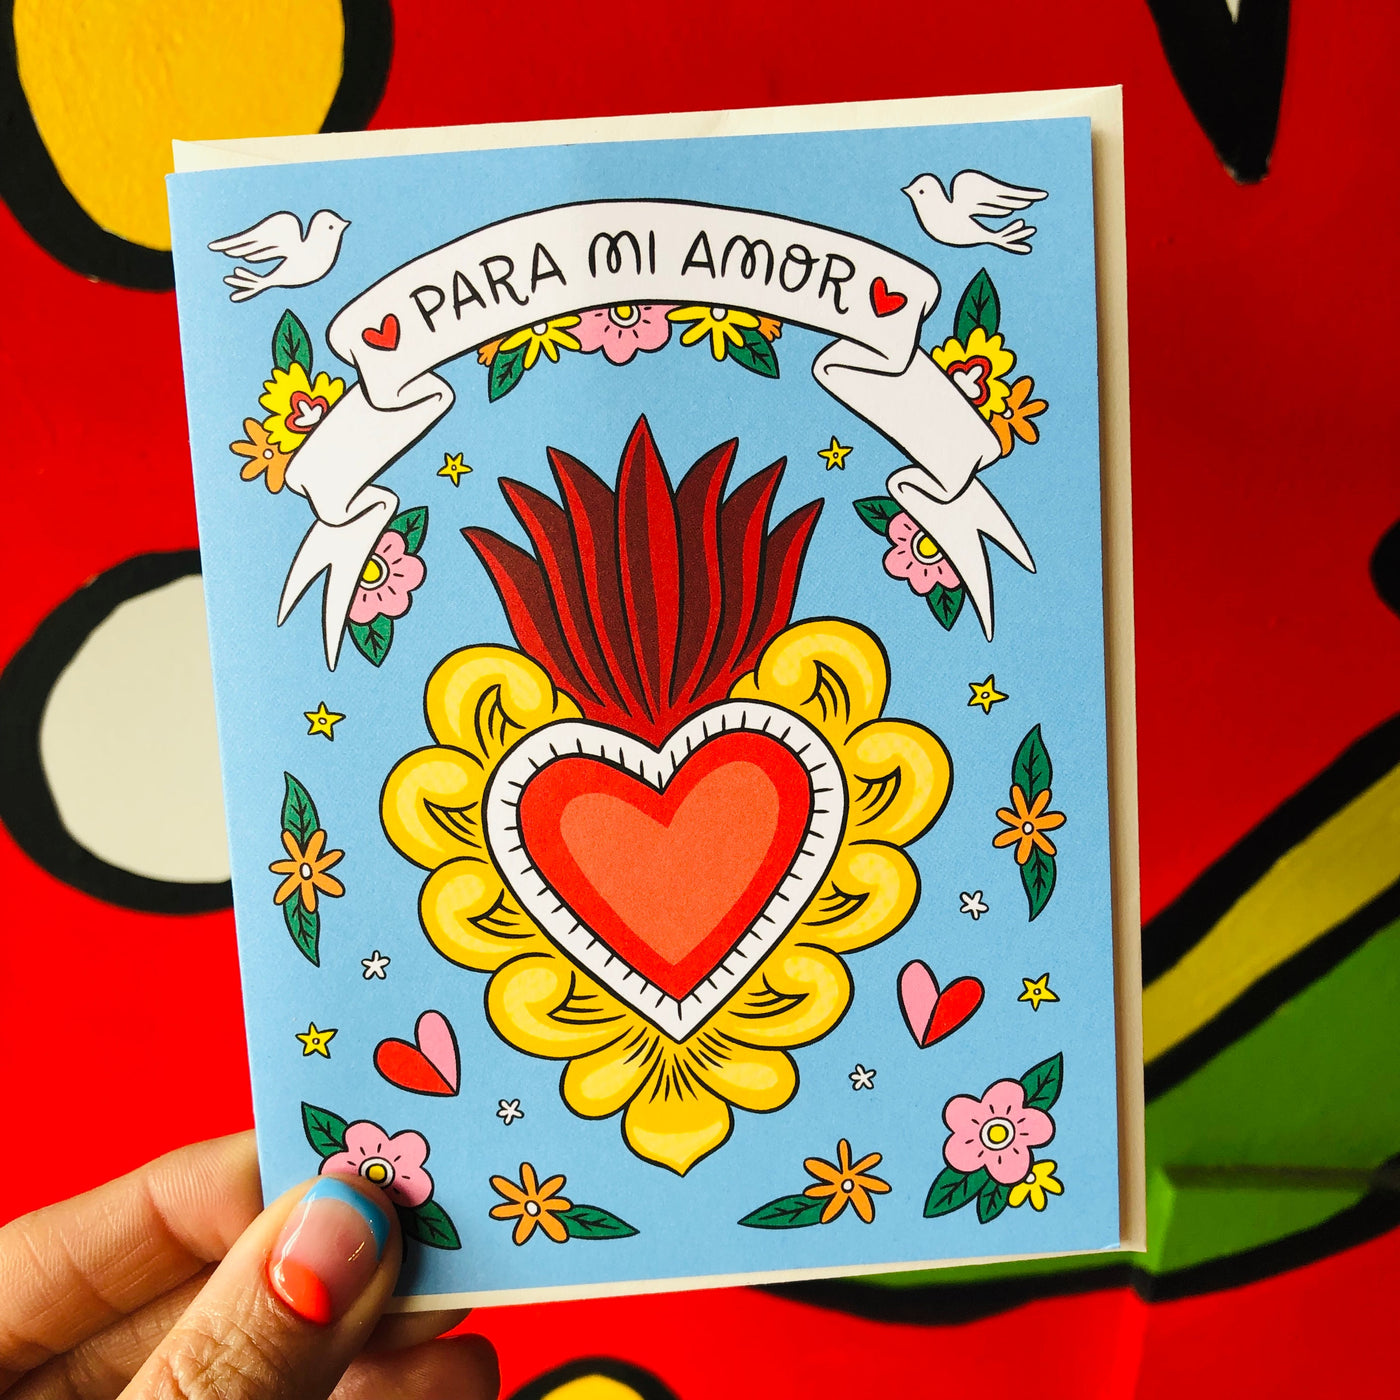 Para Mi Amor greeting card. Design features sacred heart.